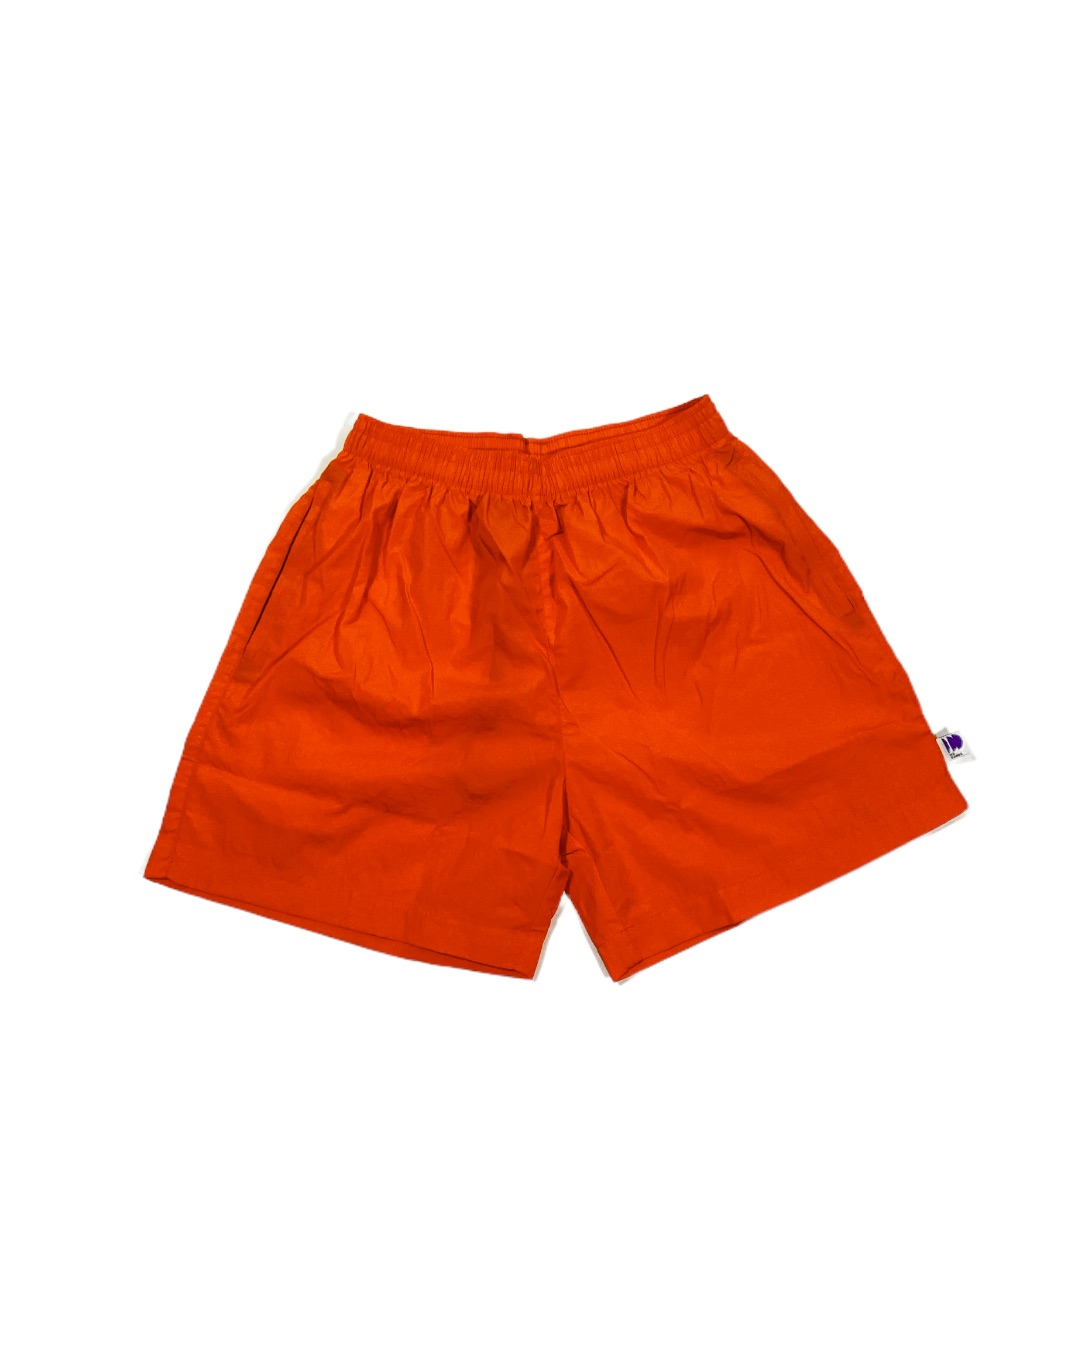 Umbre Shorts (Orange)